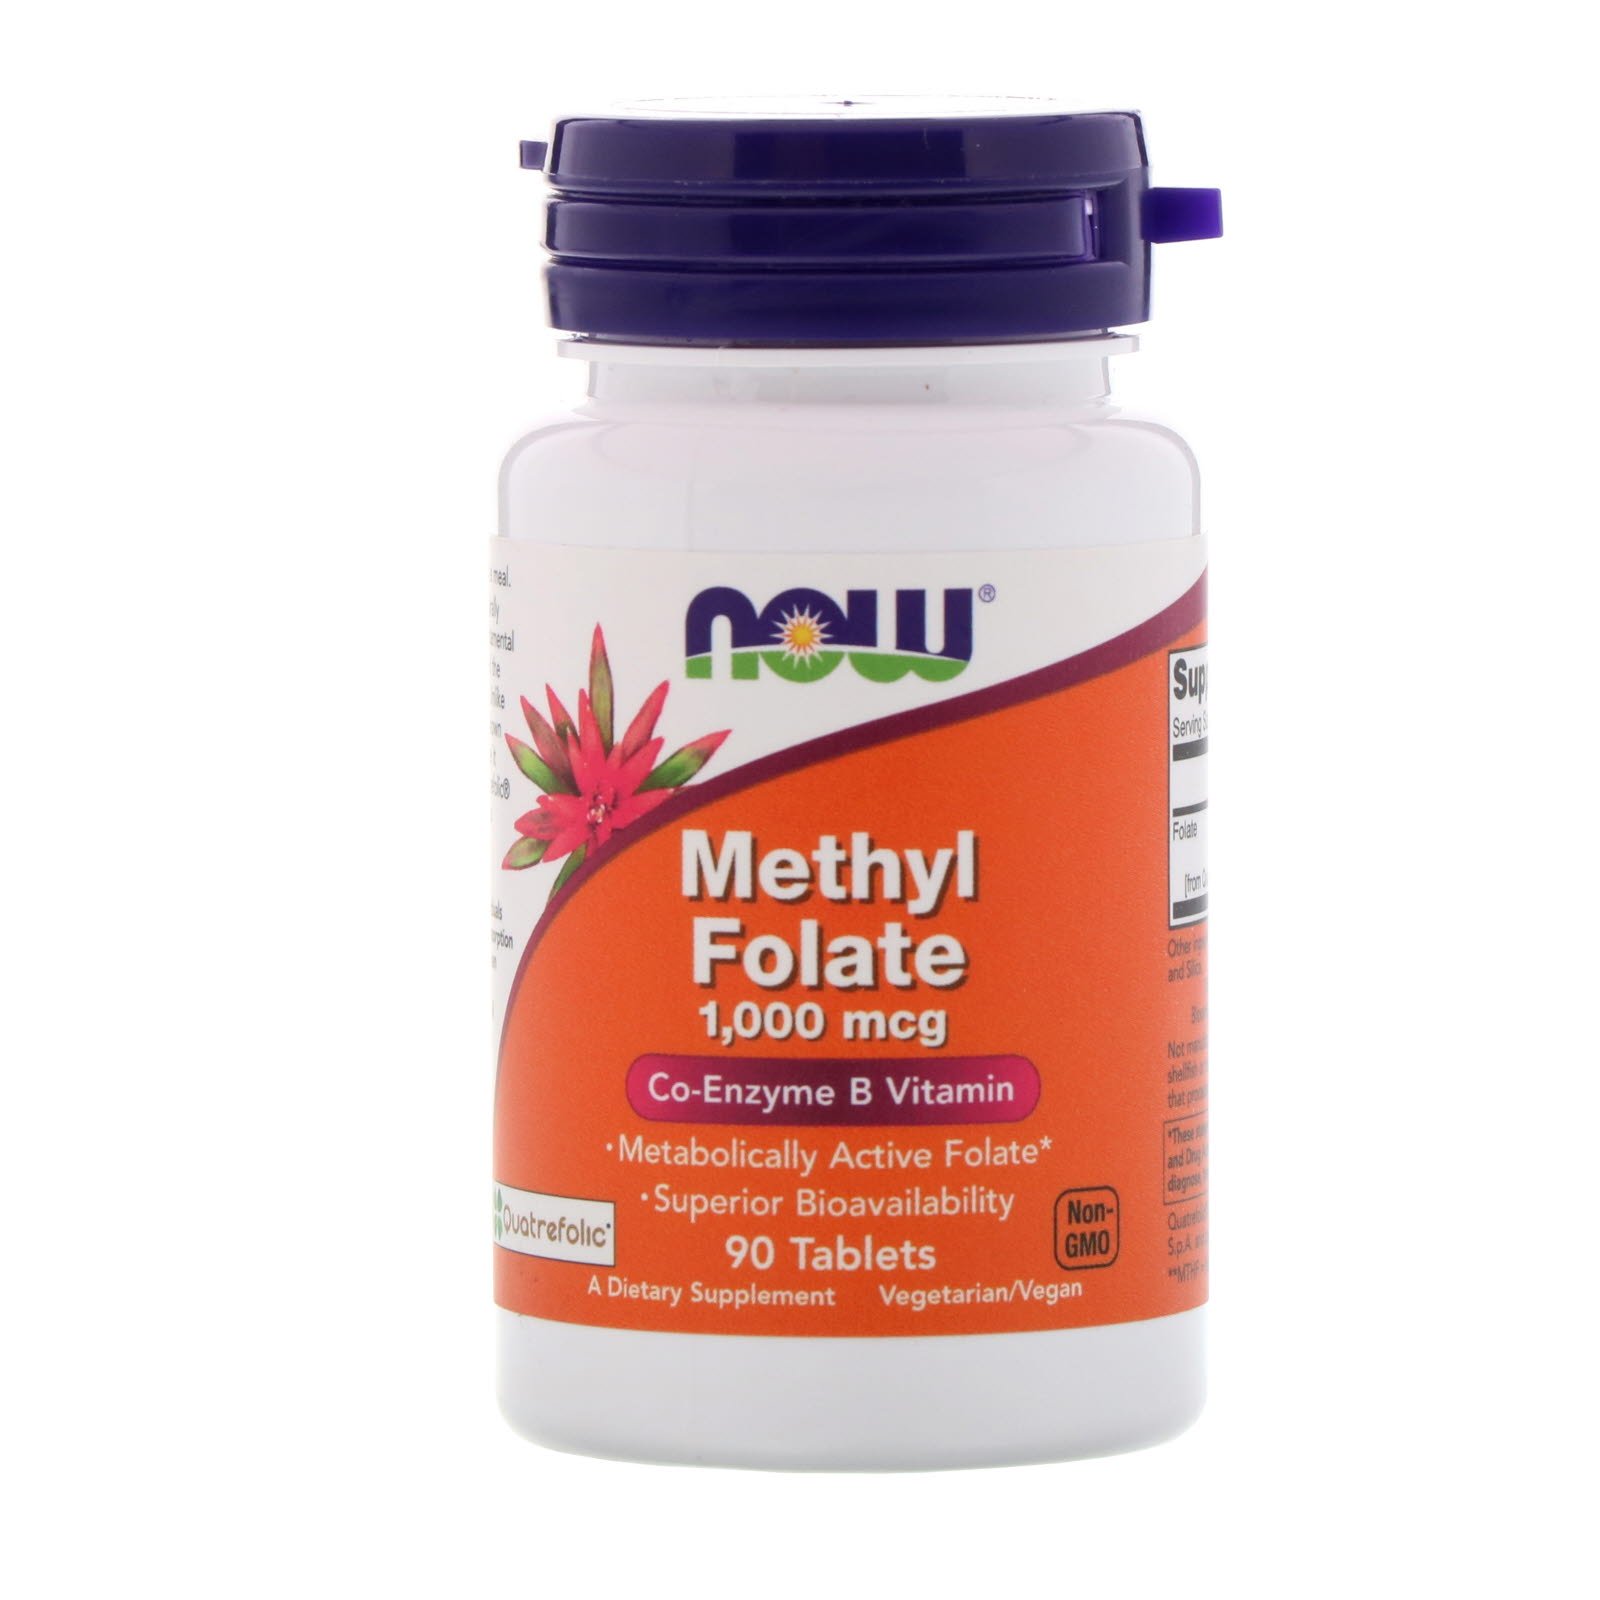 NOW Methyl Folate, Метил Фолат, Витамин Б Коэнзим 1000 мкг - 90 таблеток (деформация упаковки - заводской брак)